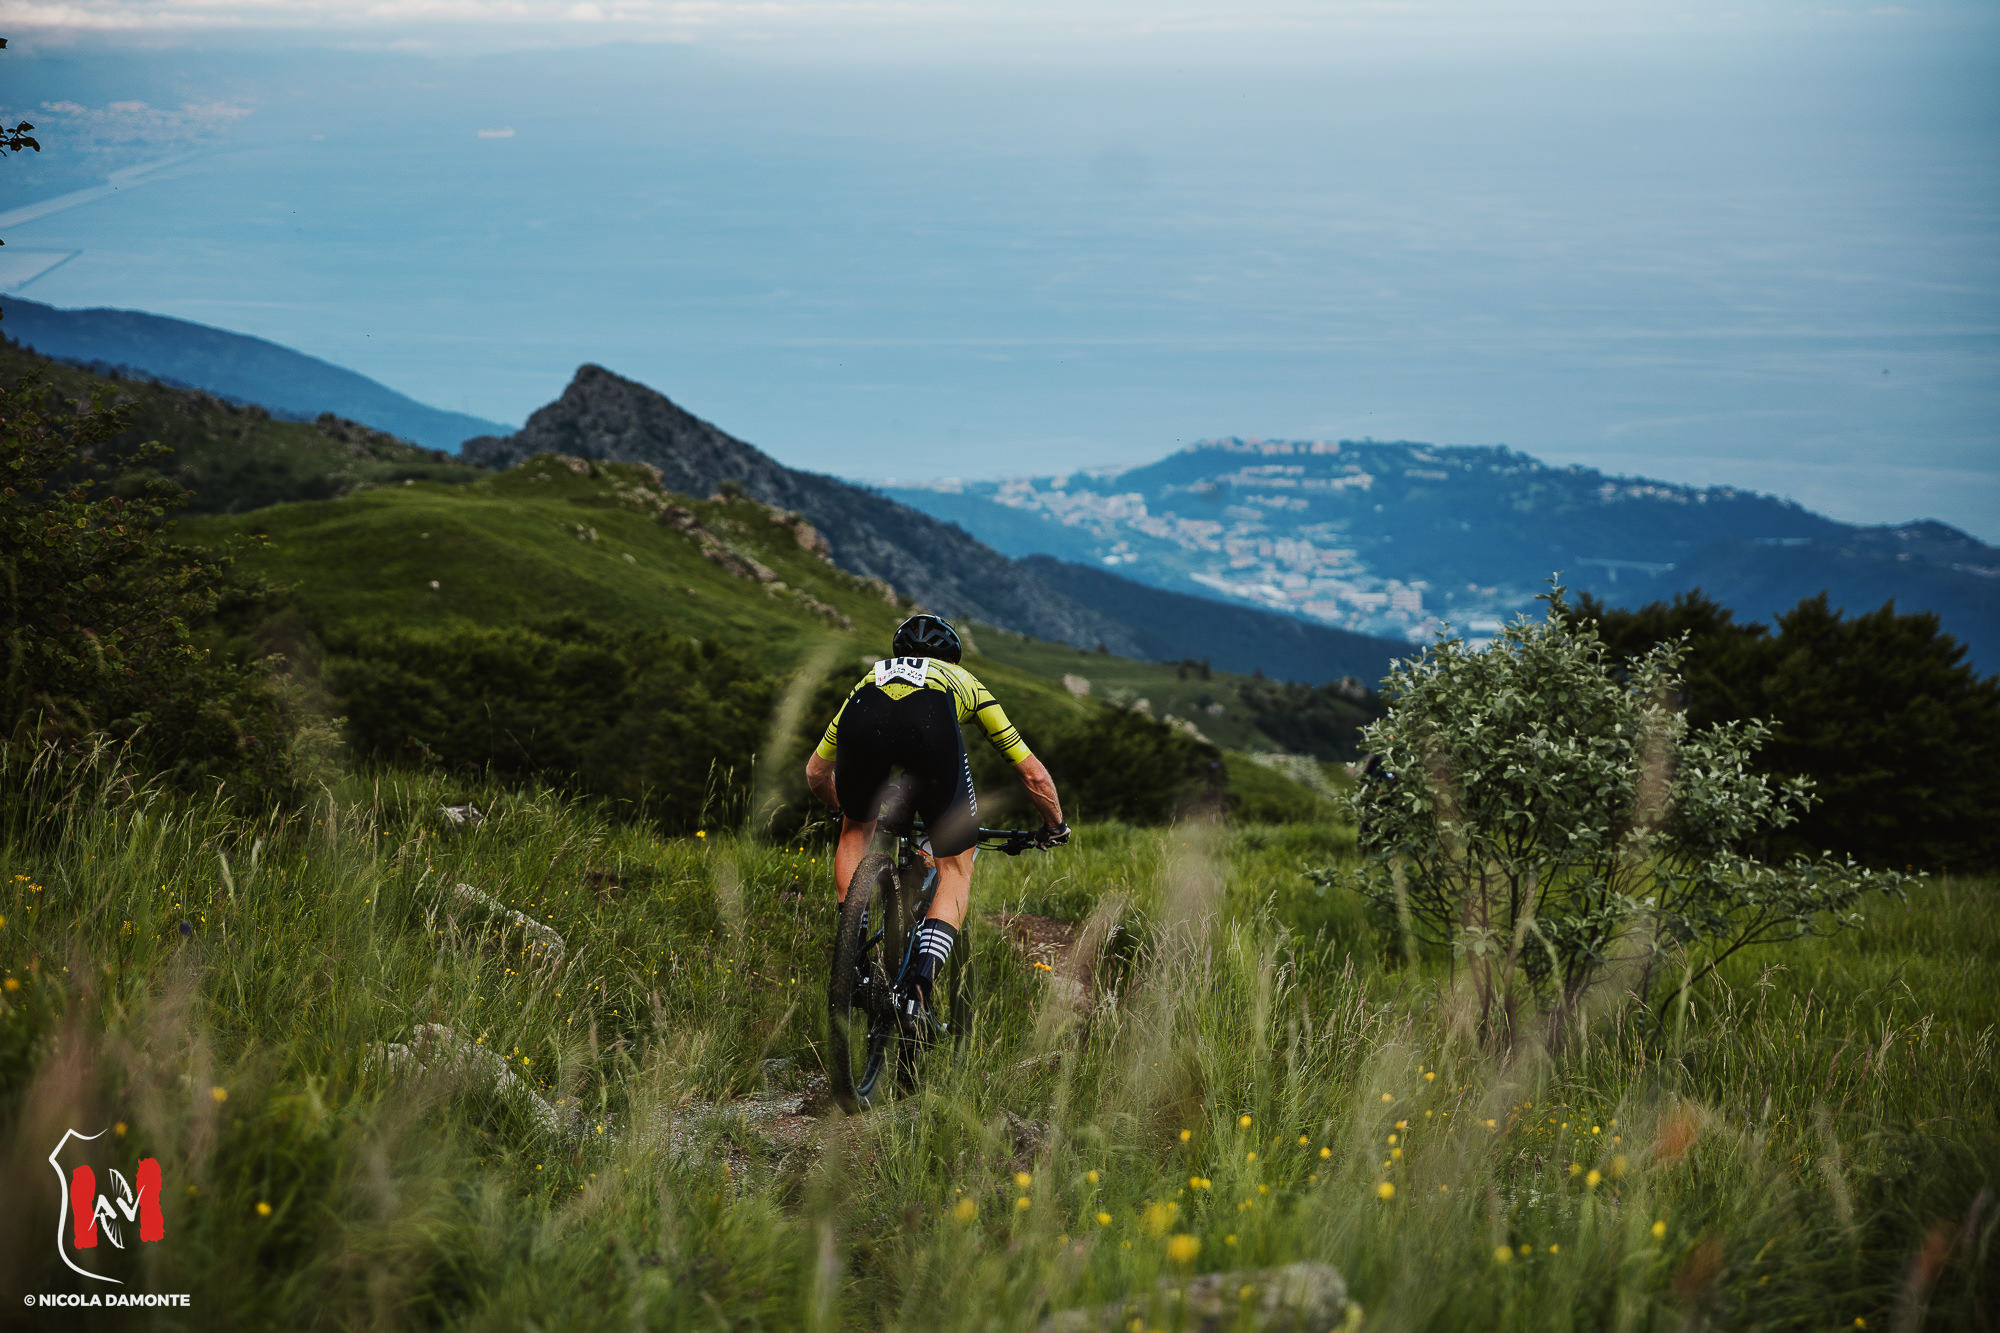 Alta Via Stage Race: de ‘real Ligurian style’ die je moet ervaren